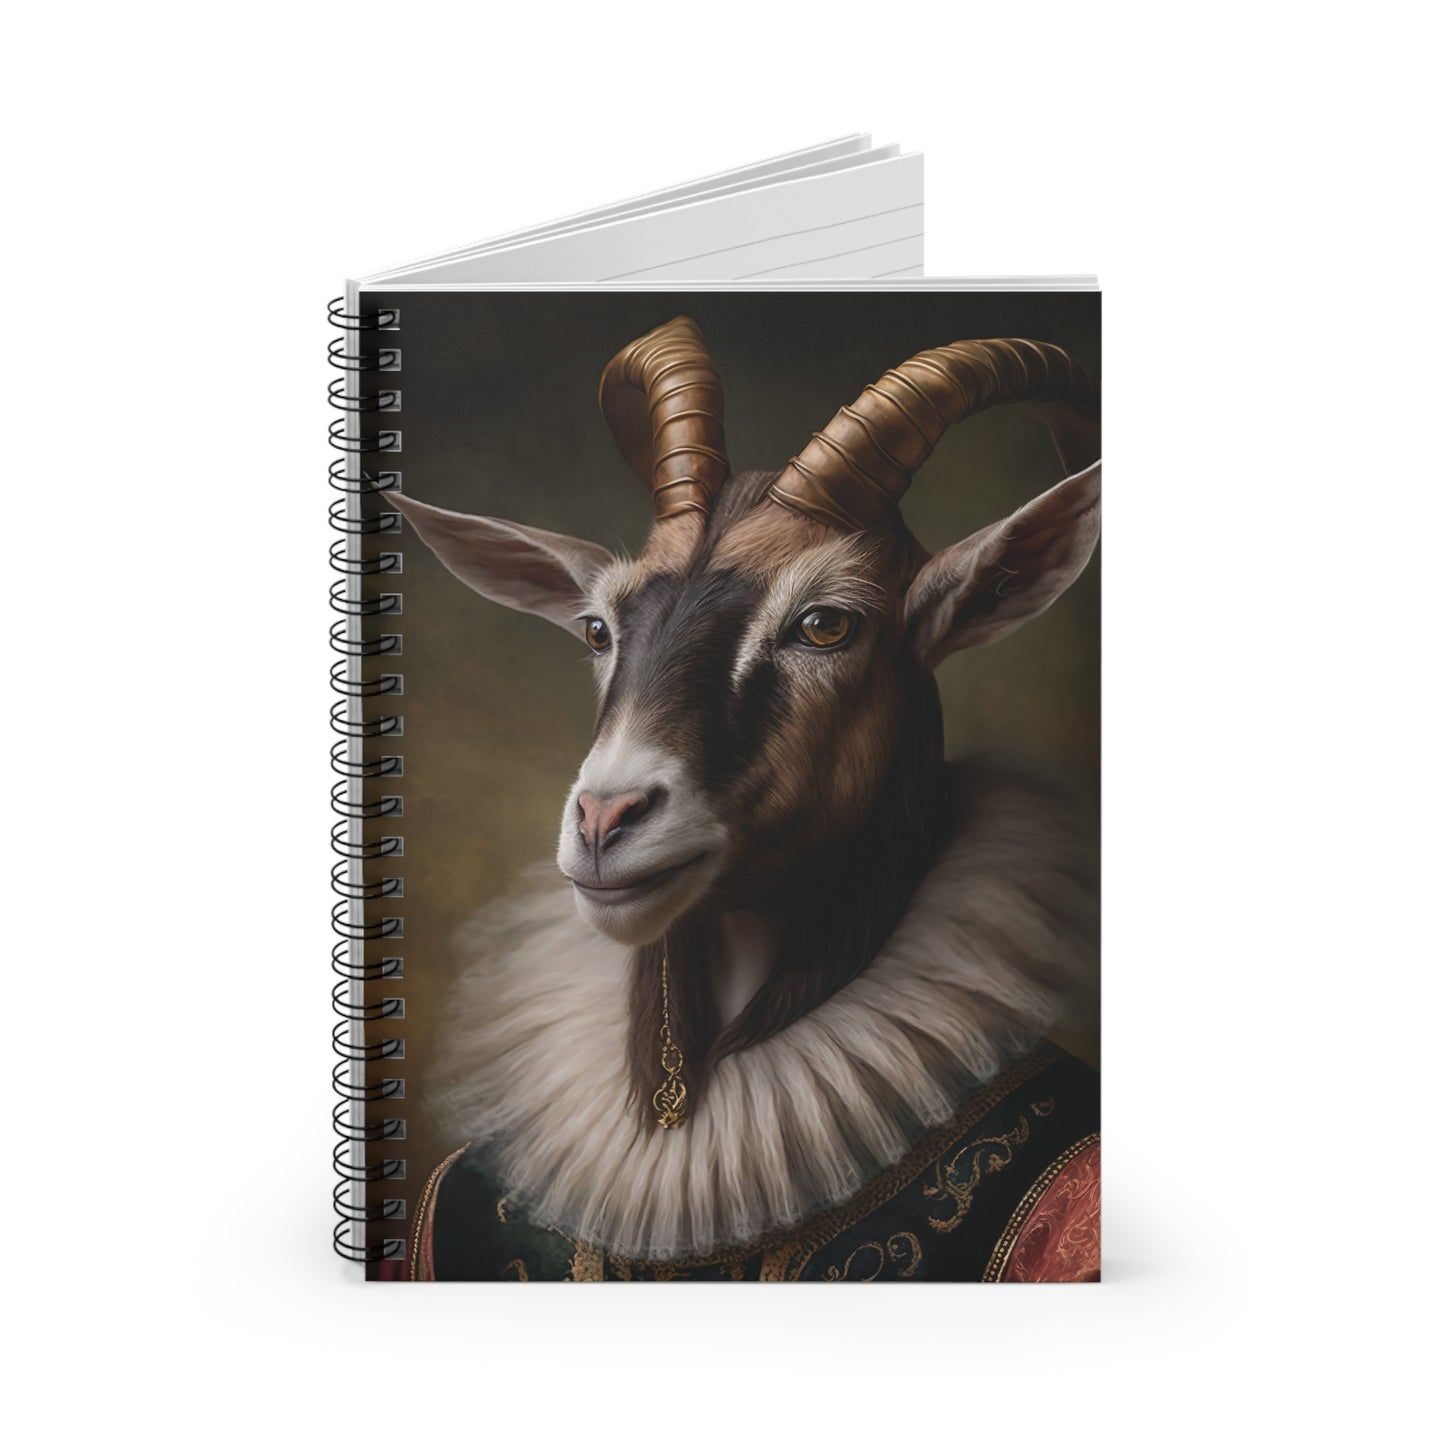 Goat Aristocrat | Spiral Notebook - Ruled Line